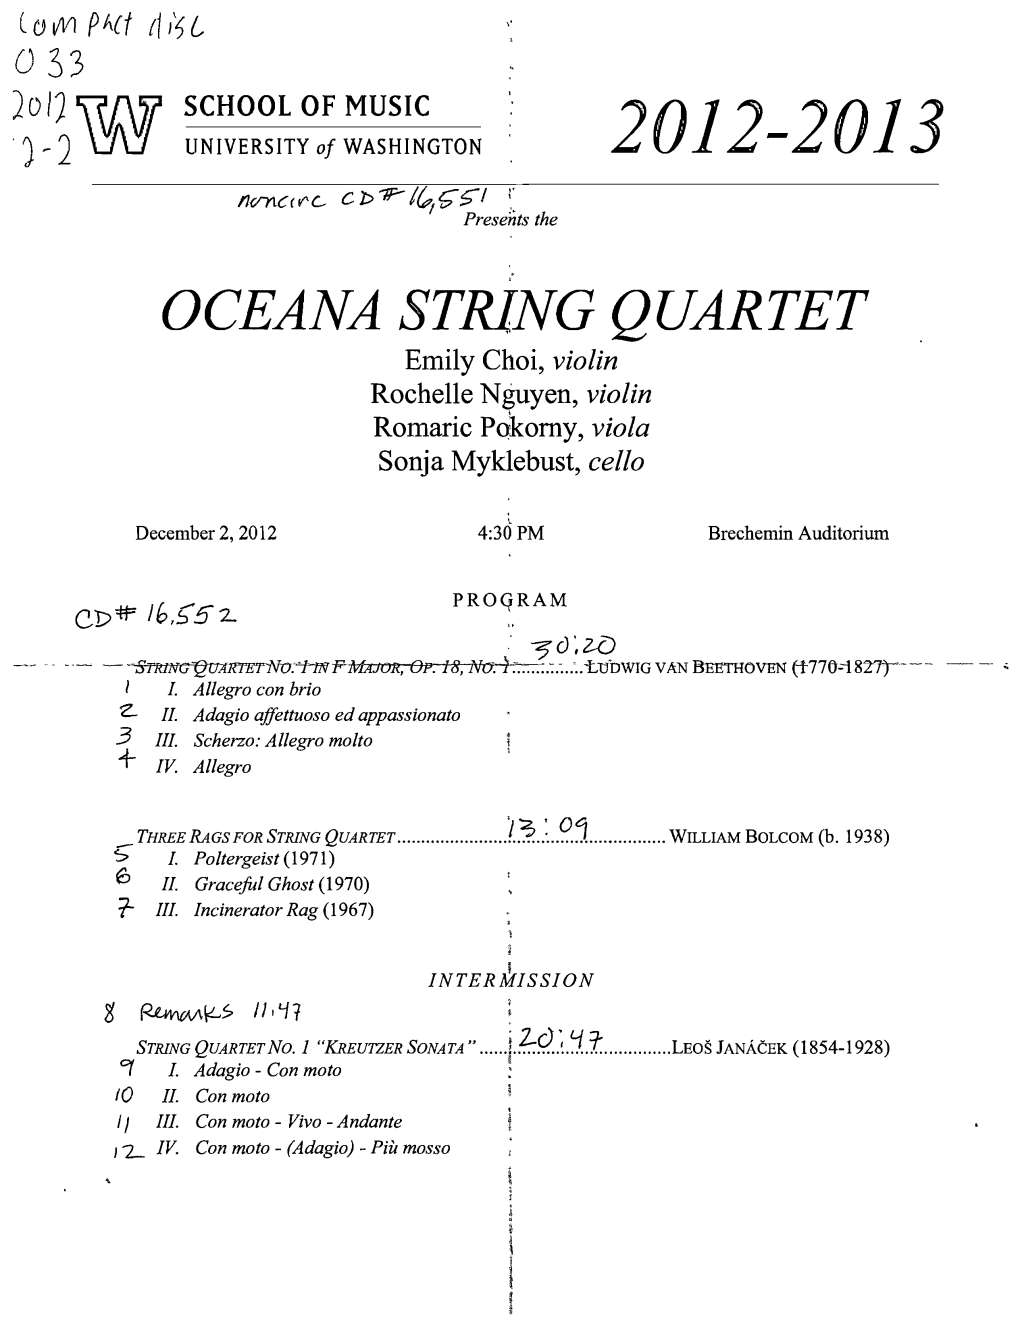 OCEANA STRING QUARTET Emily Choi, Violin Rochelle Nguyen, Violin Romaric Pokorny, Viola Sonja Myklebust, Cello